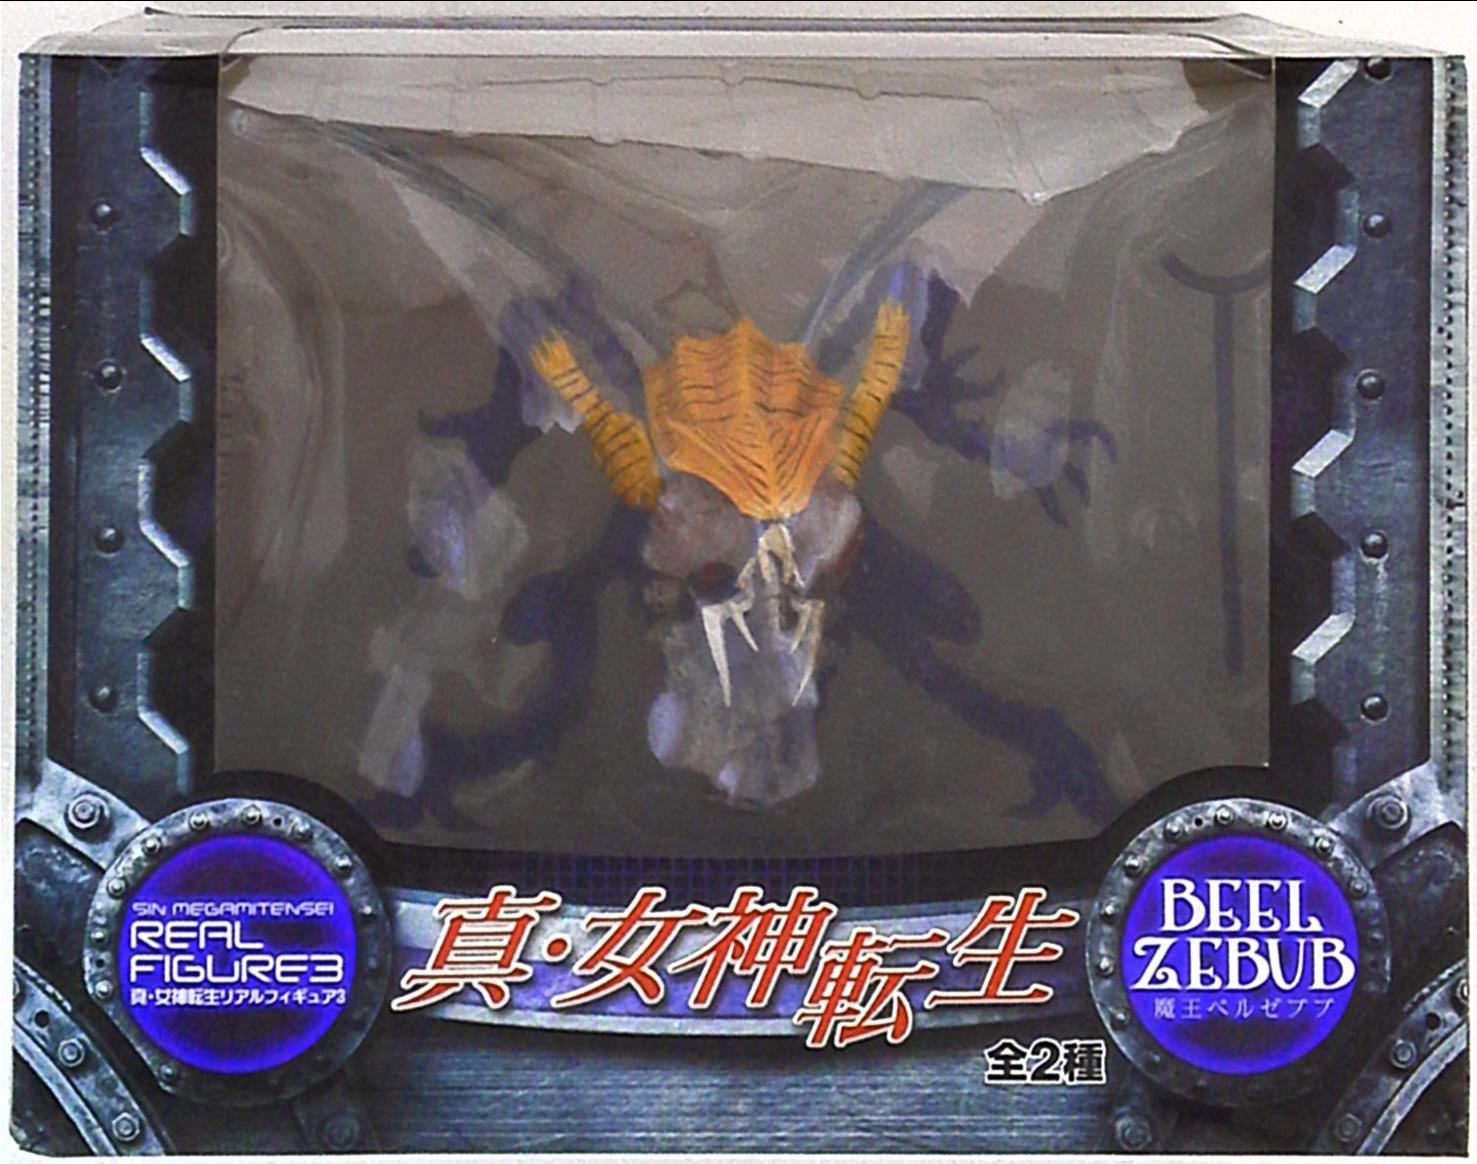 Furyu Real Figure 3 Shin Megami Tensei Bell ゼブブ Mandarake Online Shop